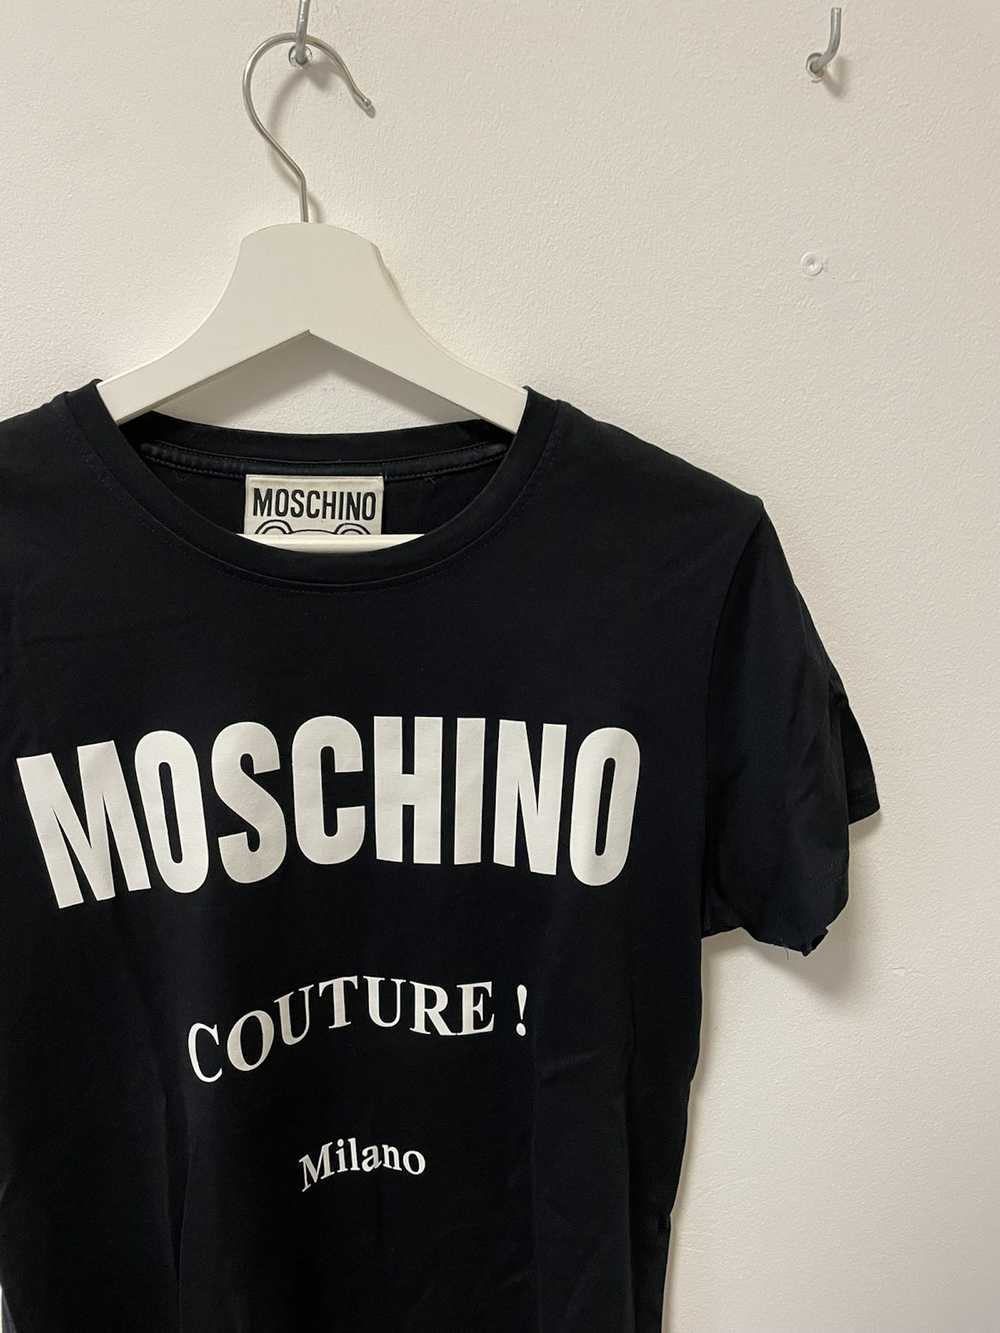 Moschino T-shirt Moschino Couture Milano - image 2